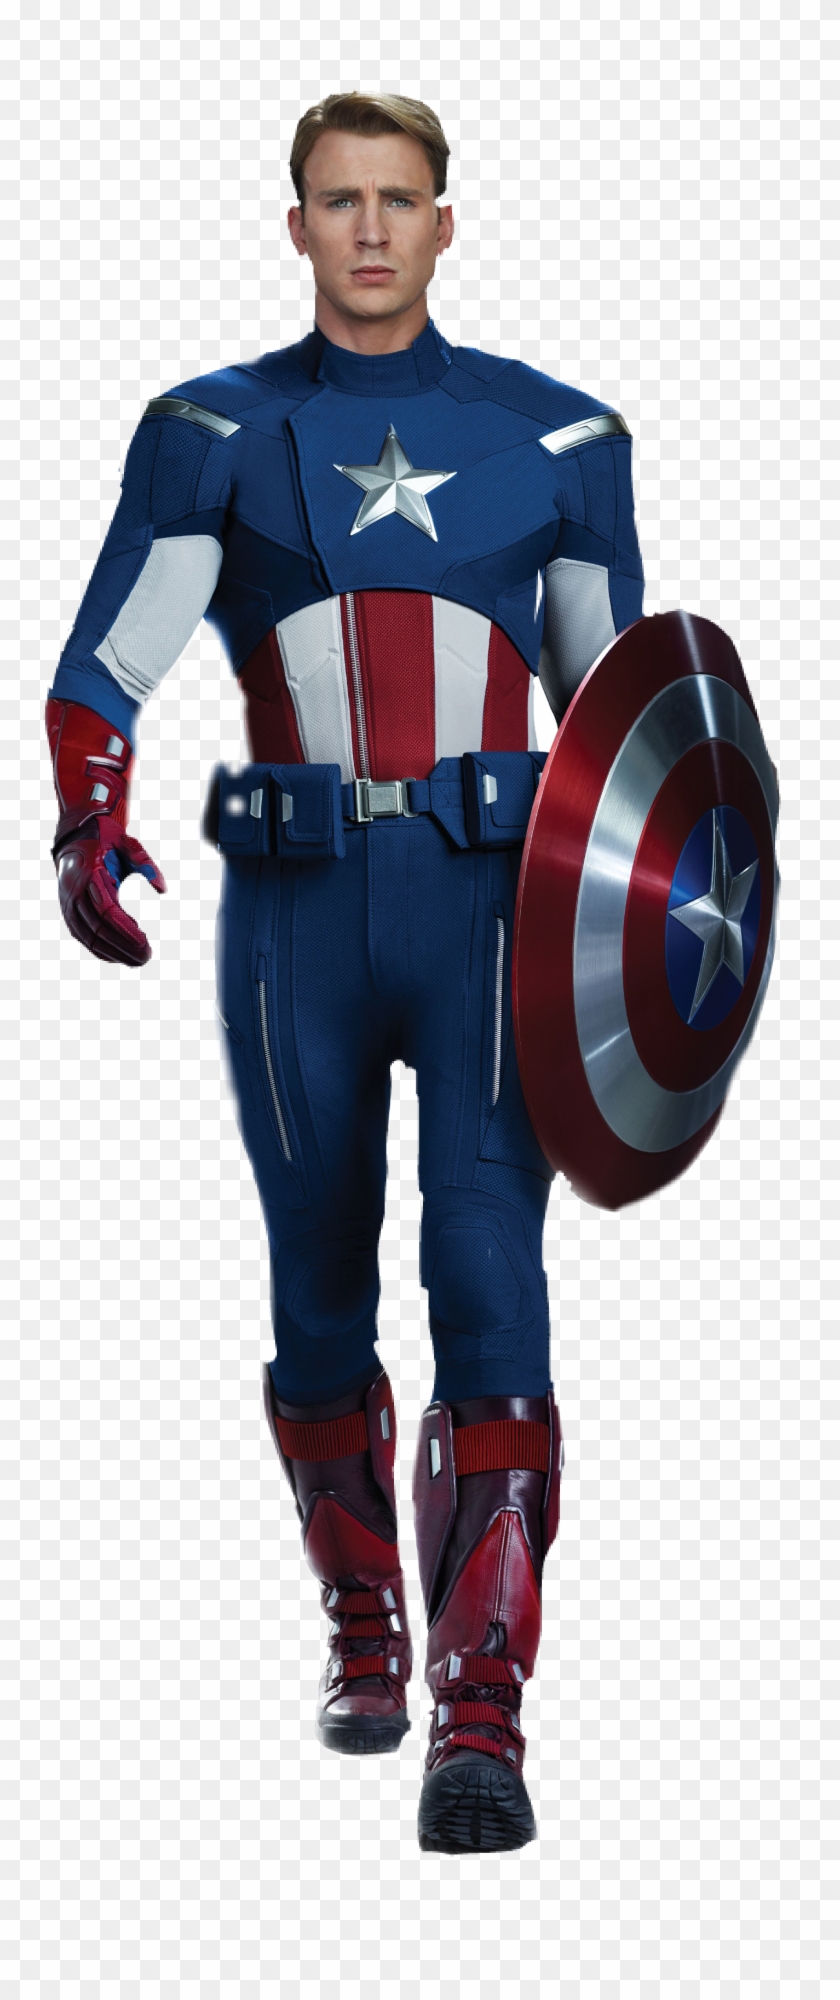 Capitanamerica Marvel Capitaoamerica Avengers Vingado - Captain America Avengers Endgame Clipart